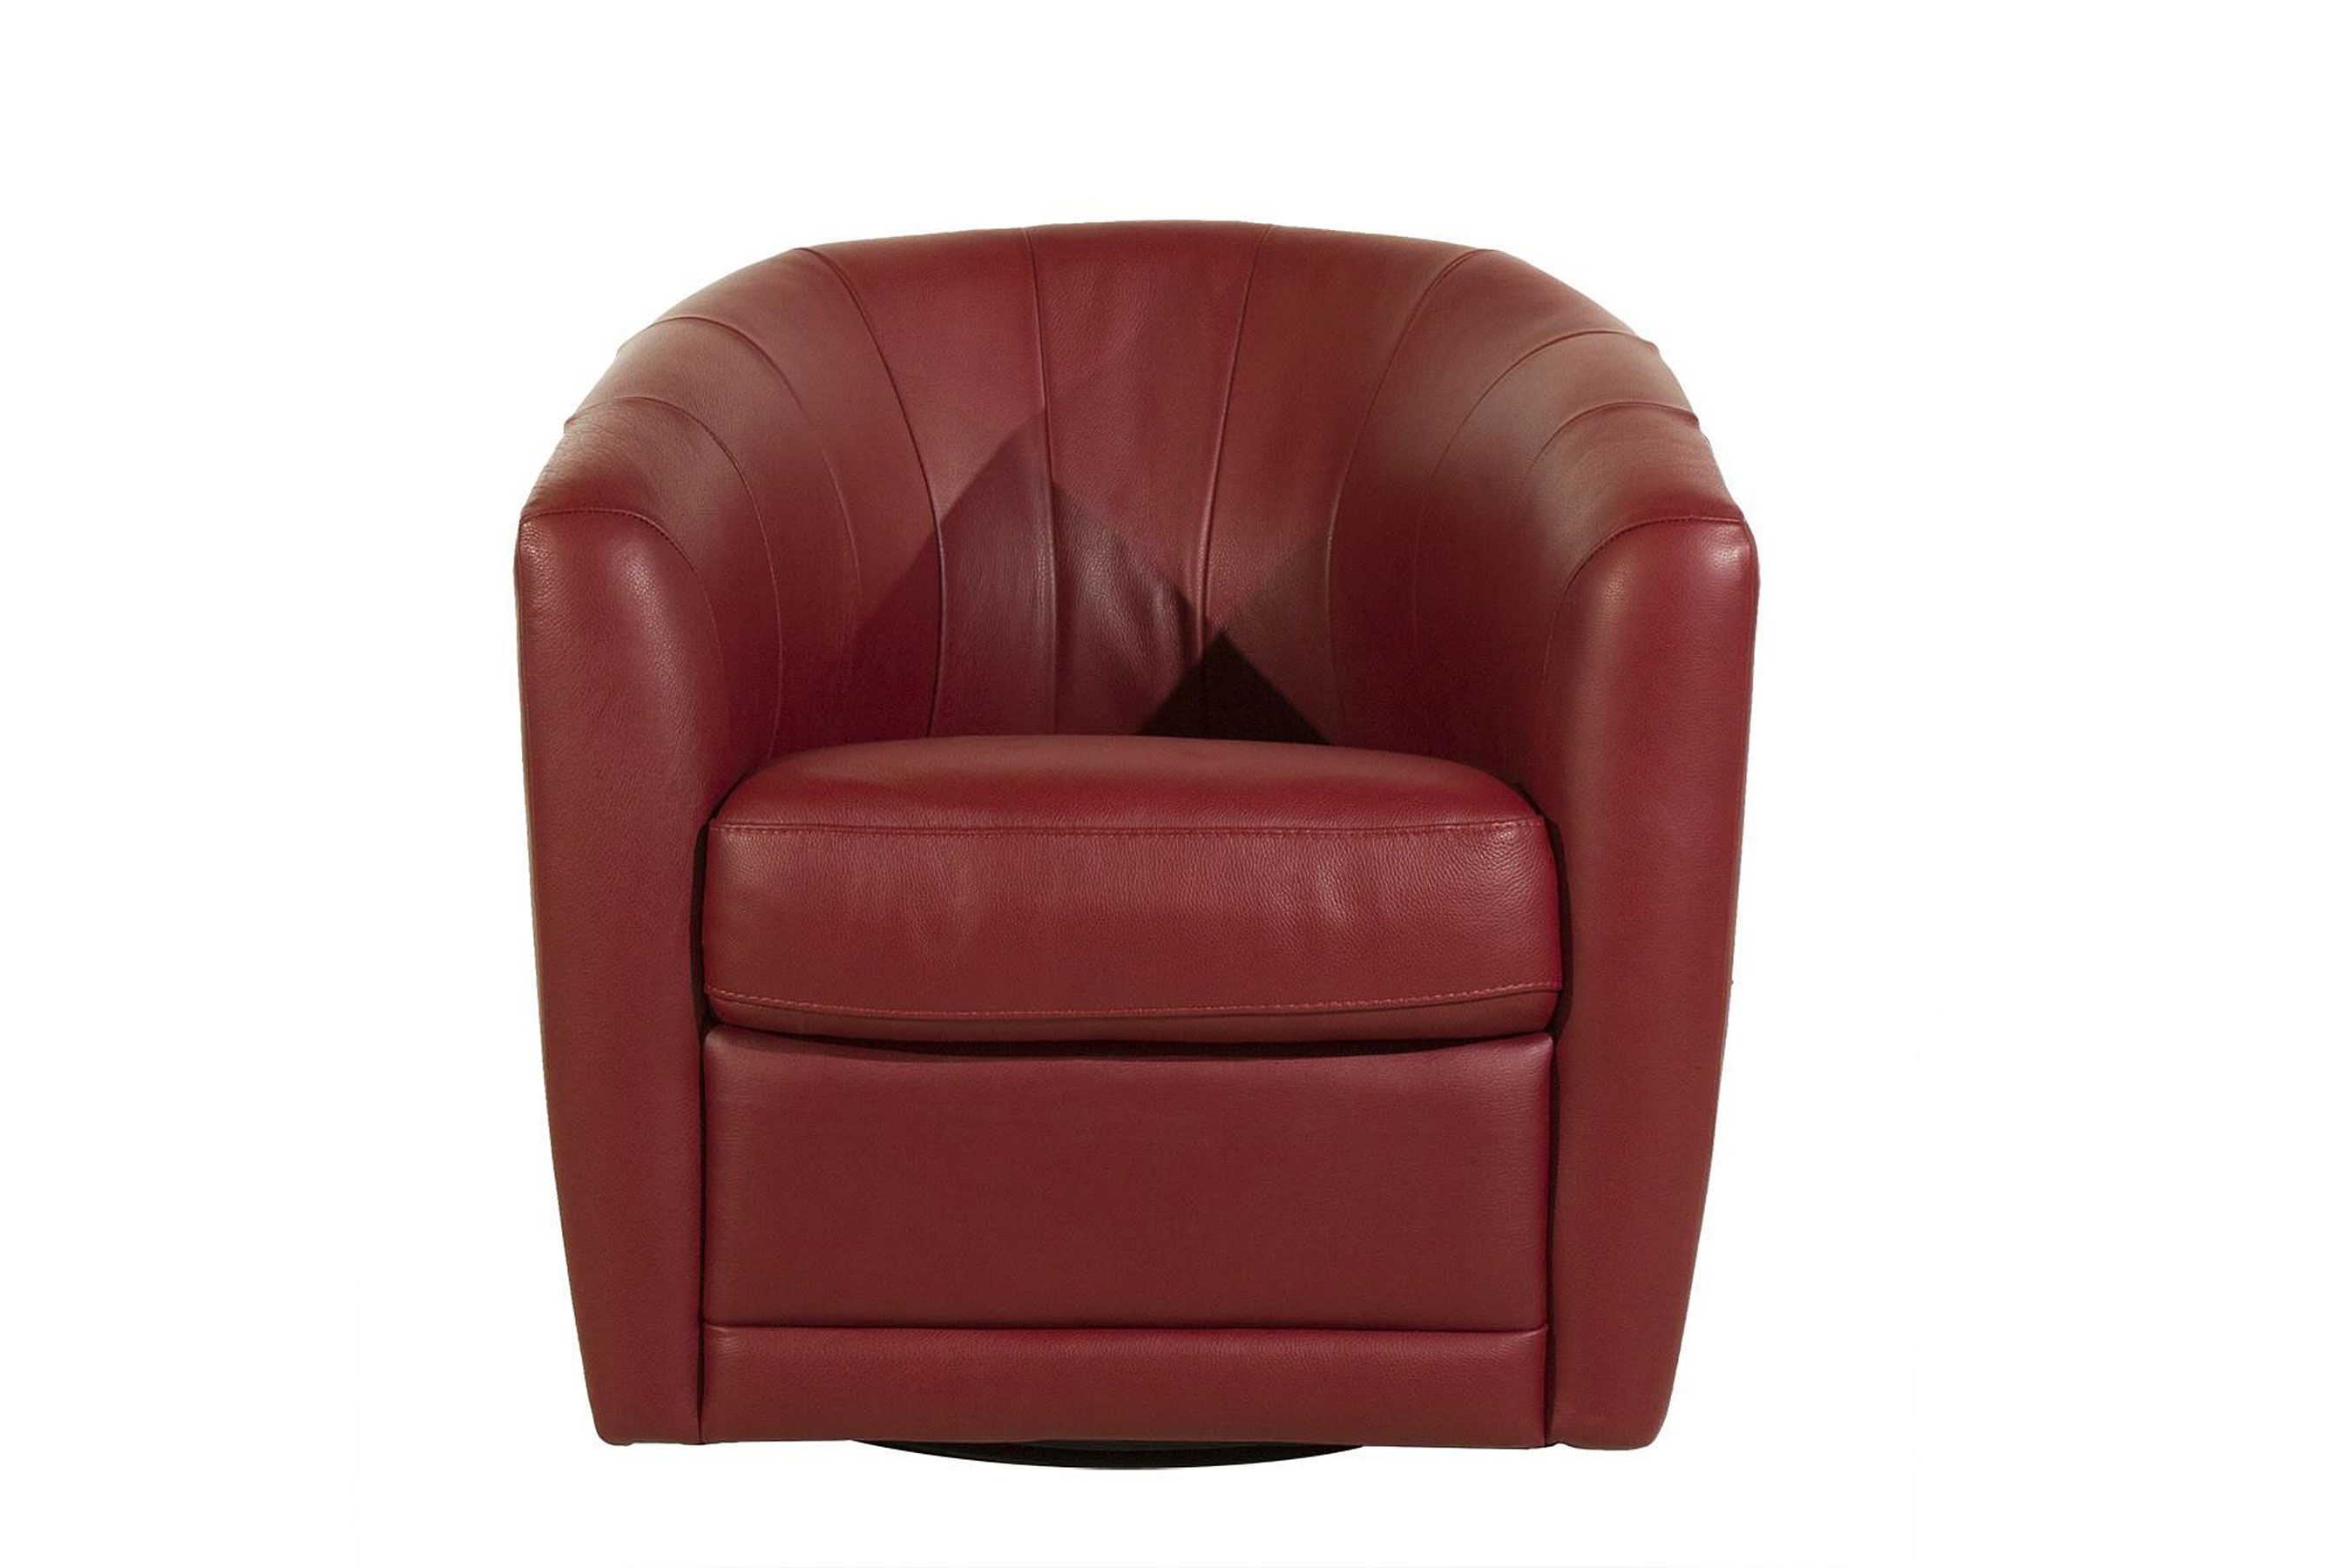 Giada B596 Top Grain Leather Barrel, Brown Leather Barrel Chair